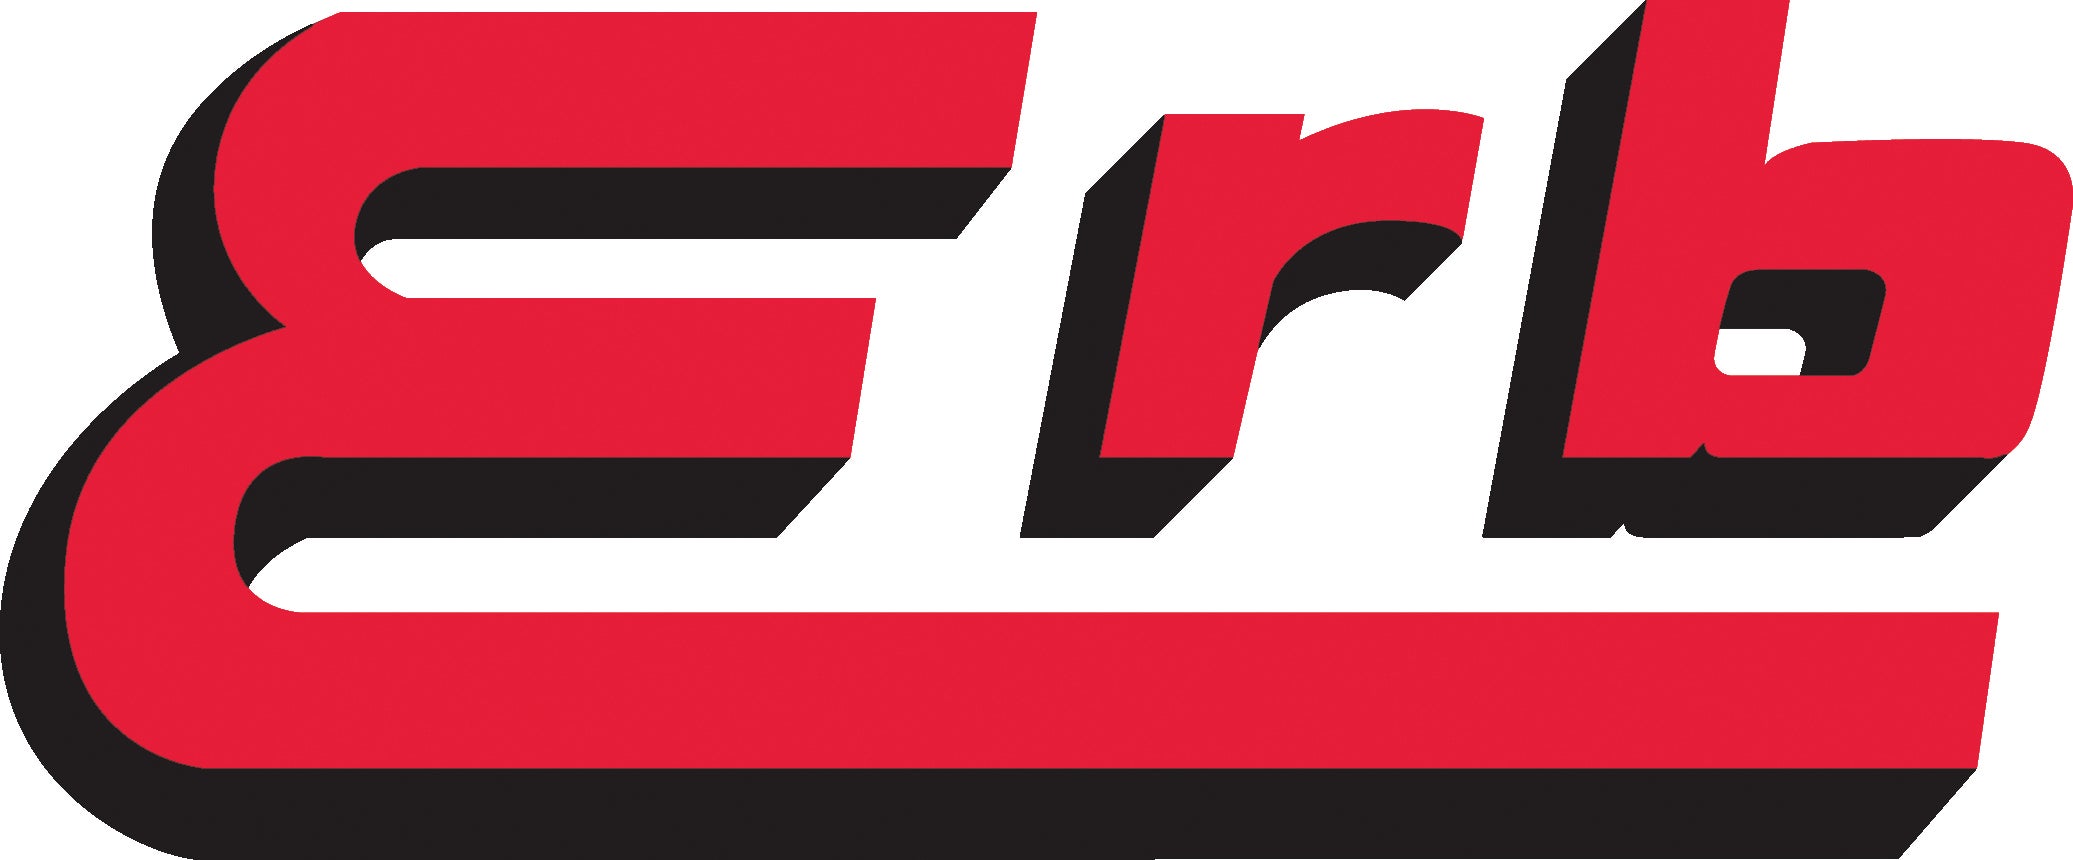 Erb logo